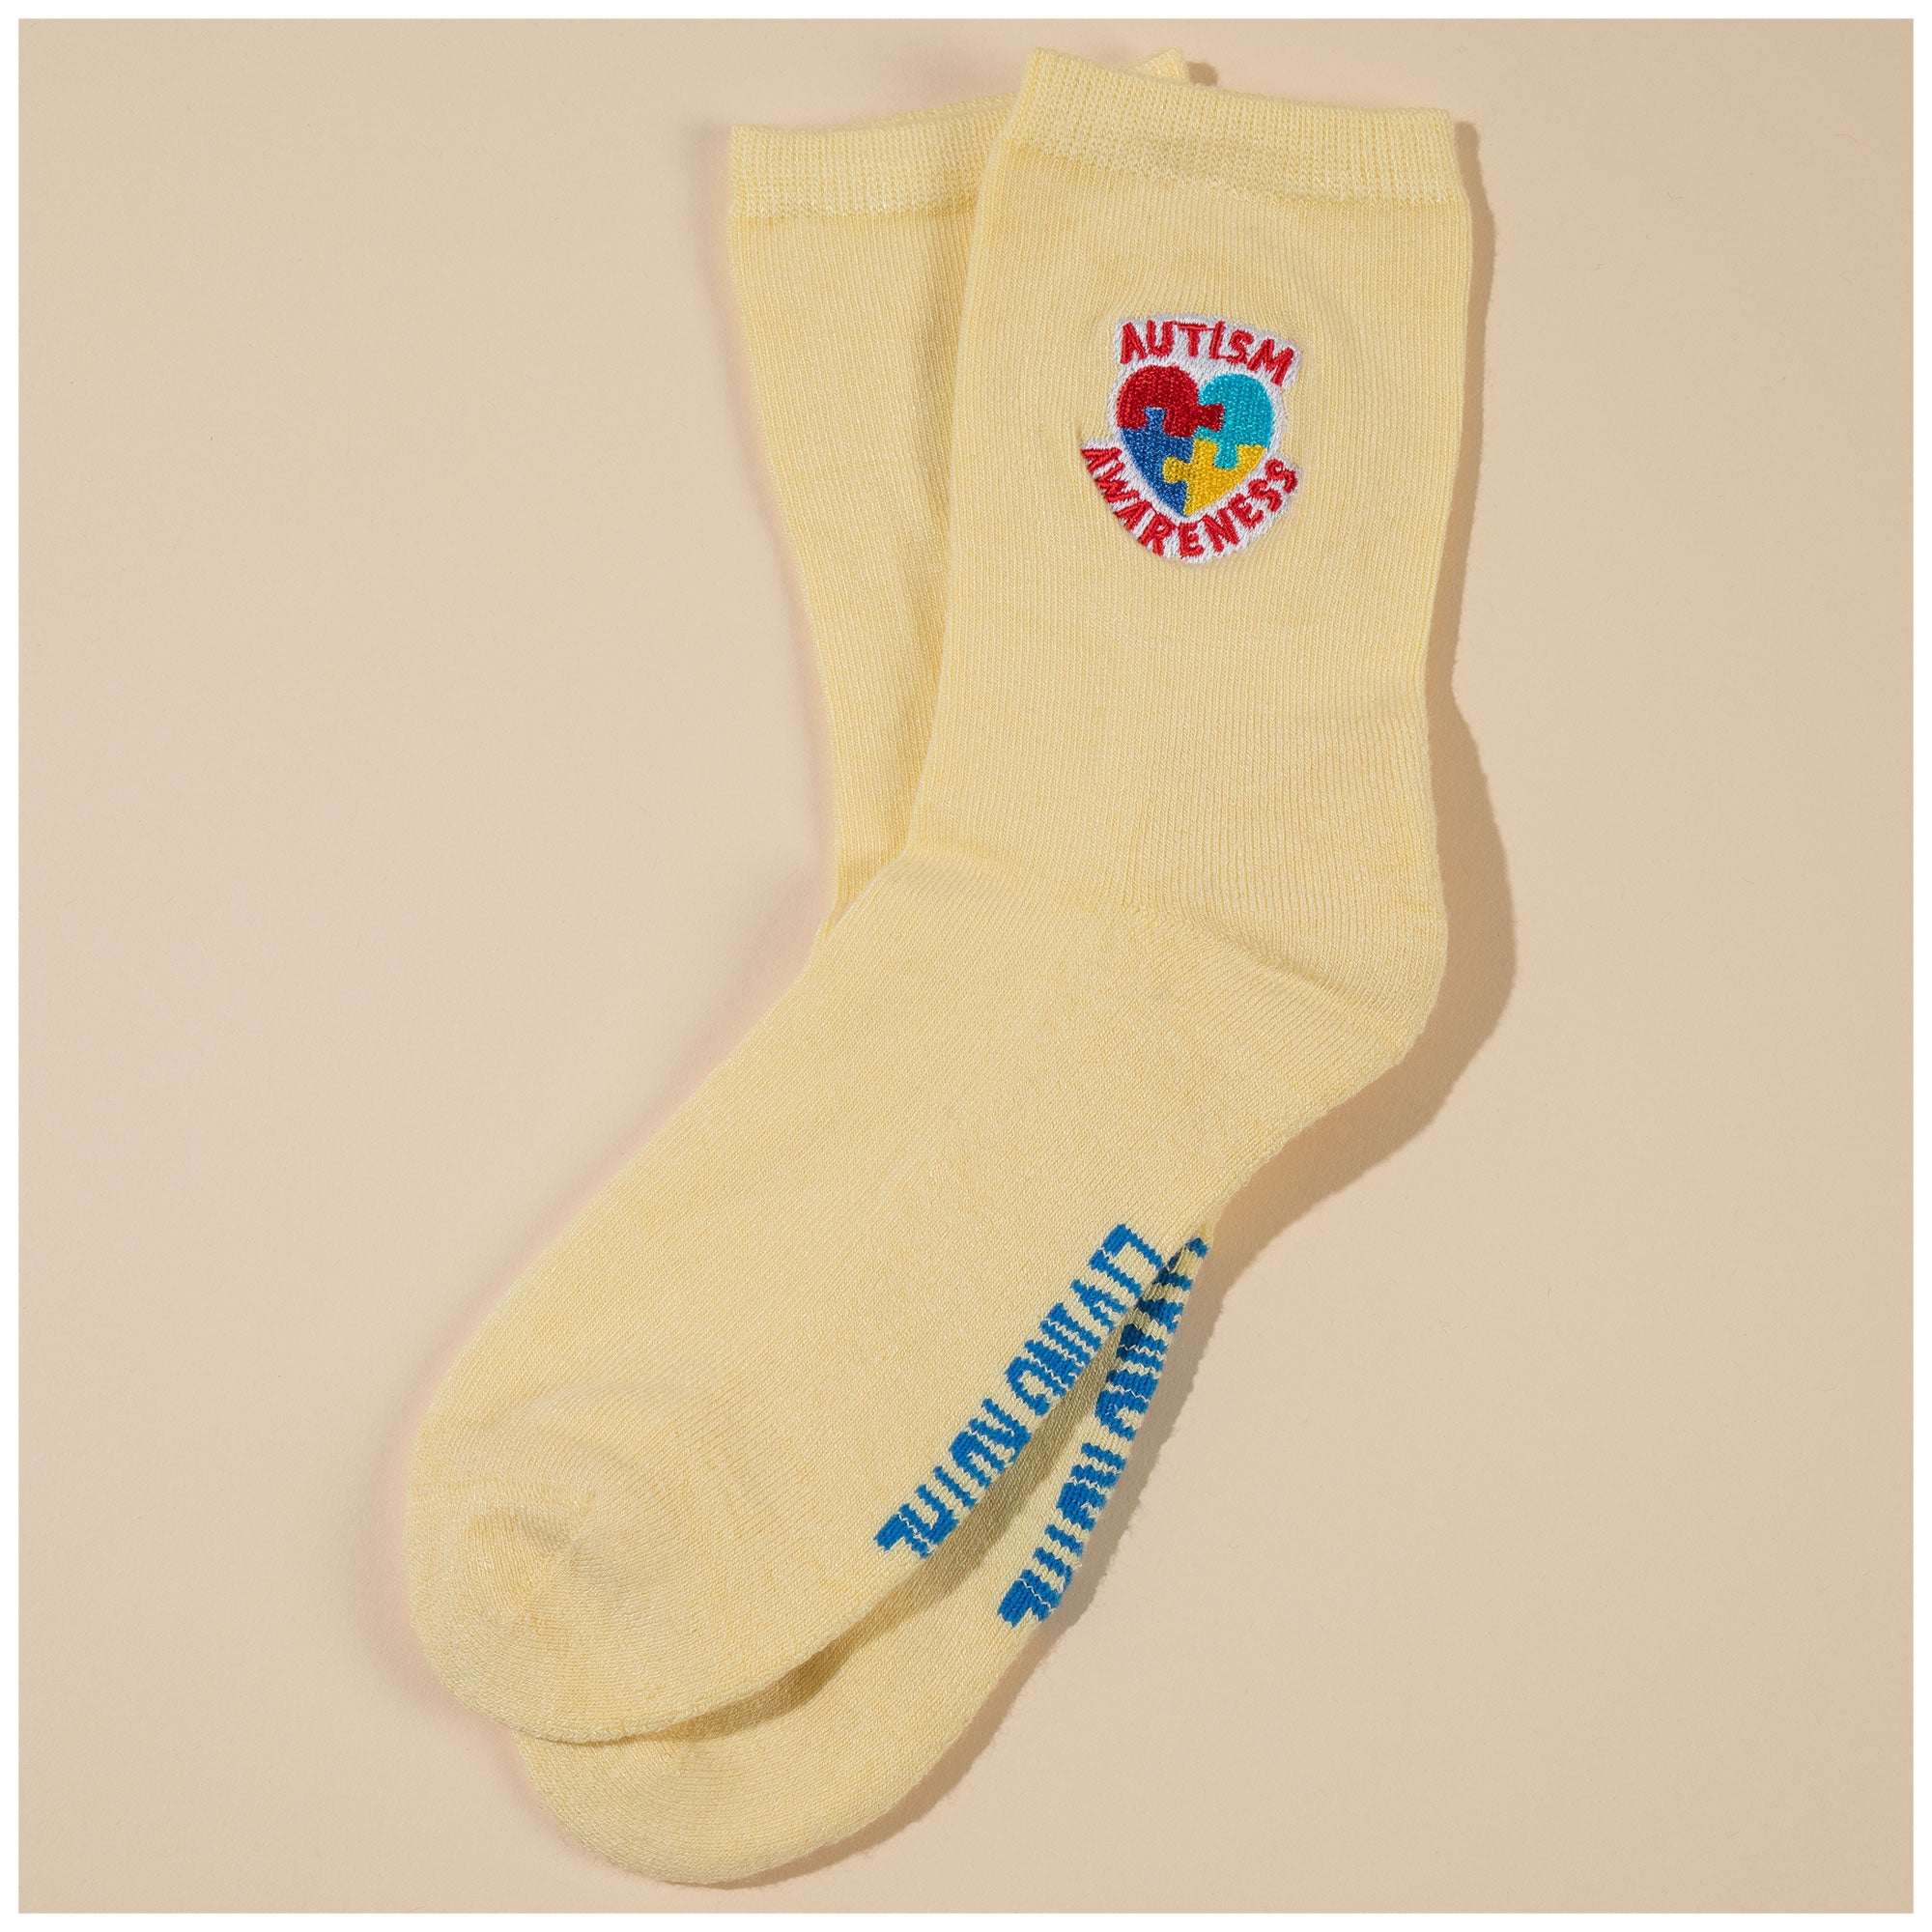 Living Royal Charity Crew Socks - Autism Awareness